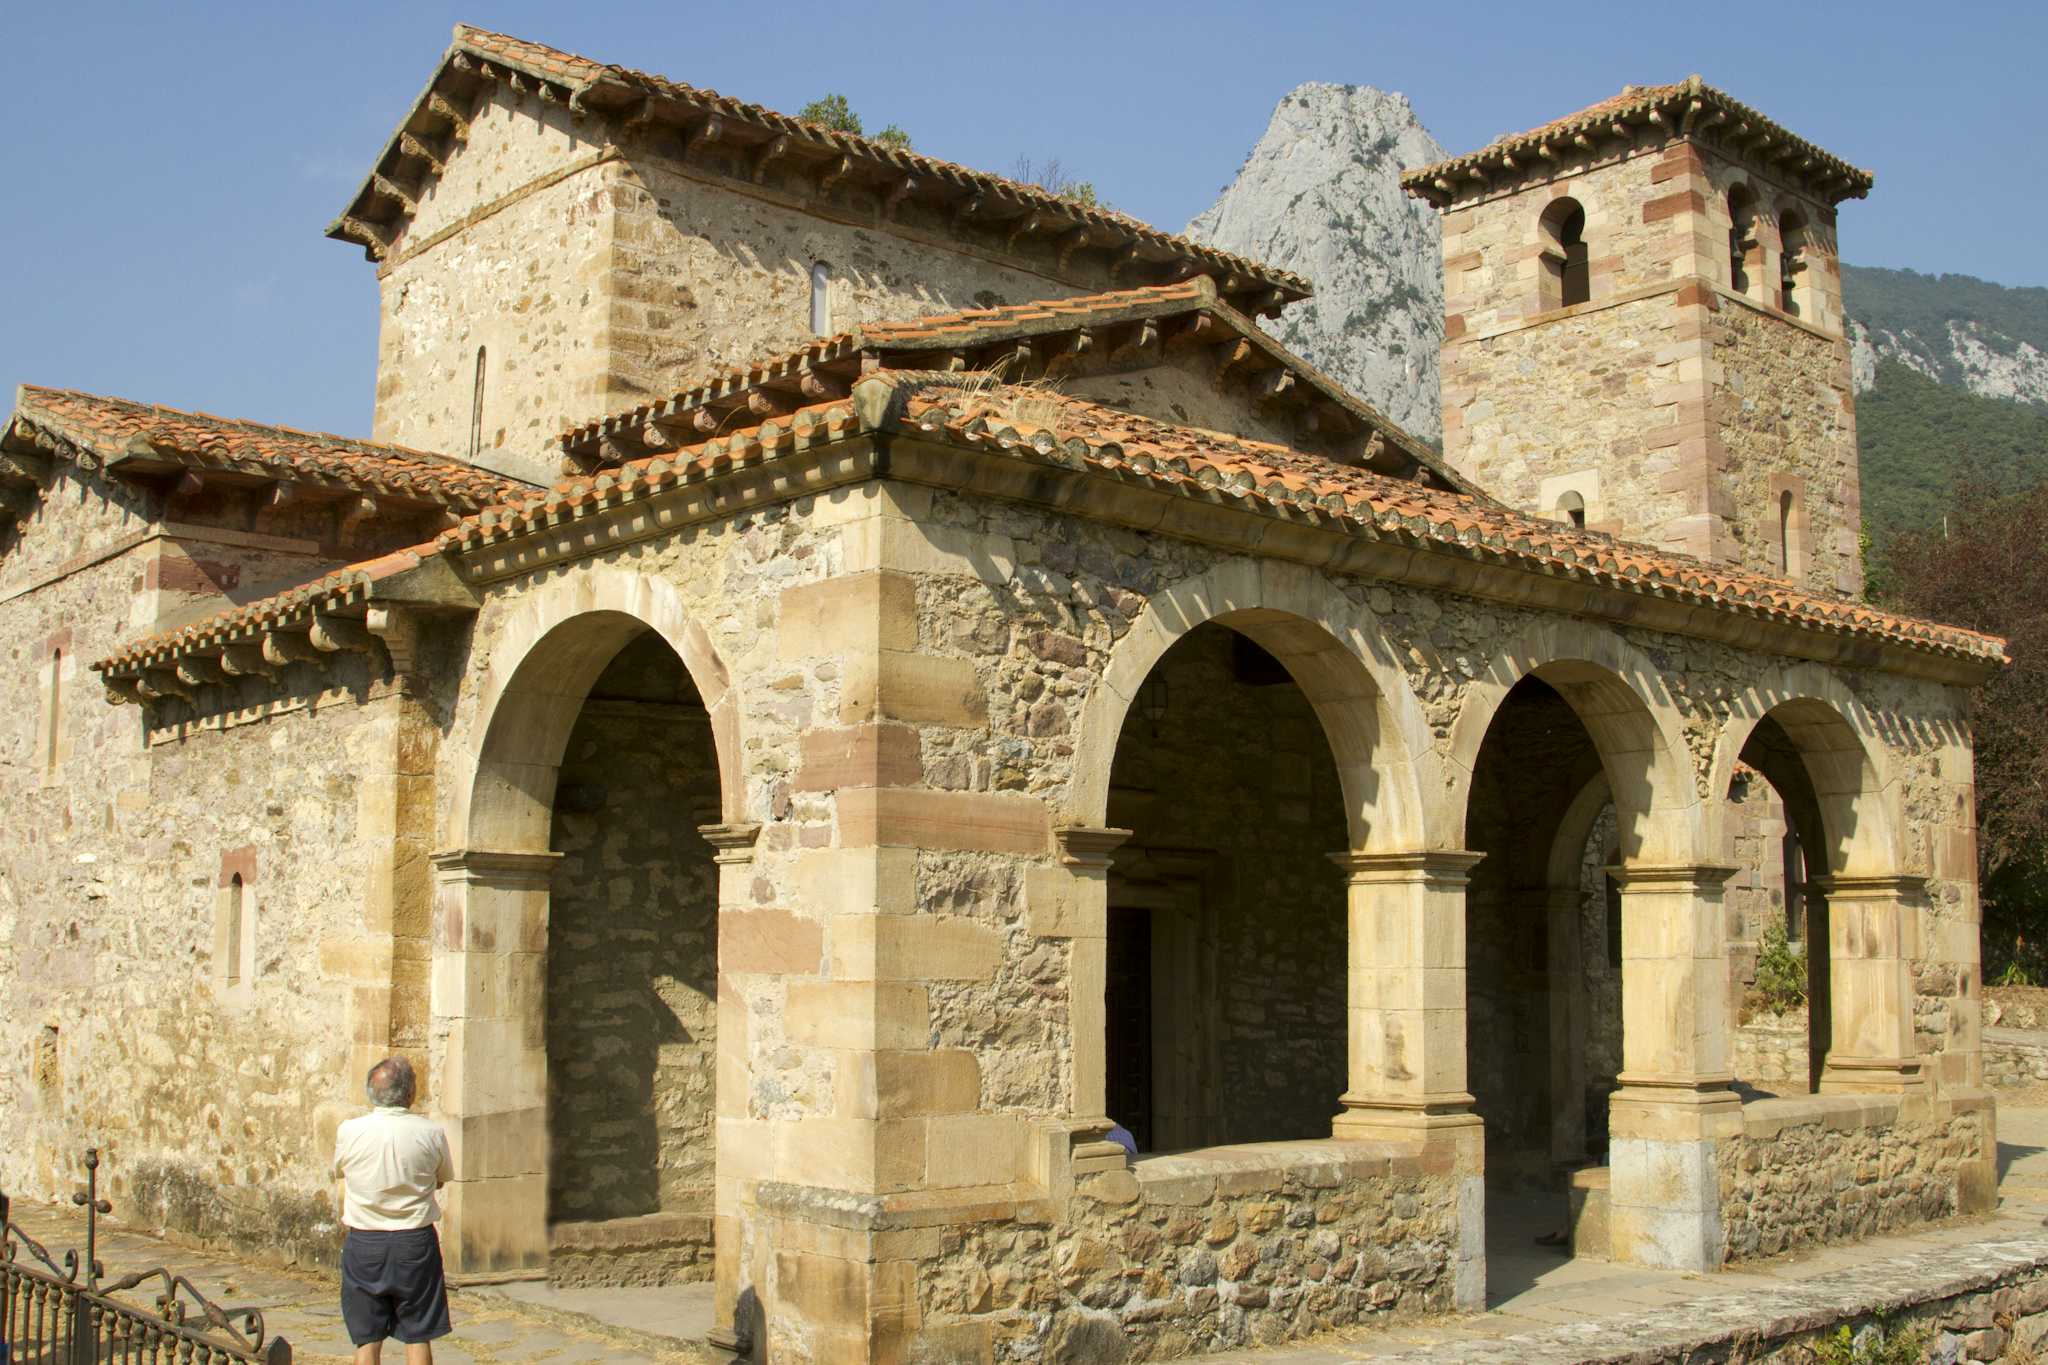 Church of Santa Maria de Lebena